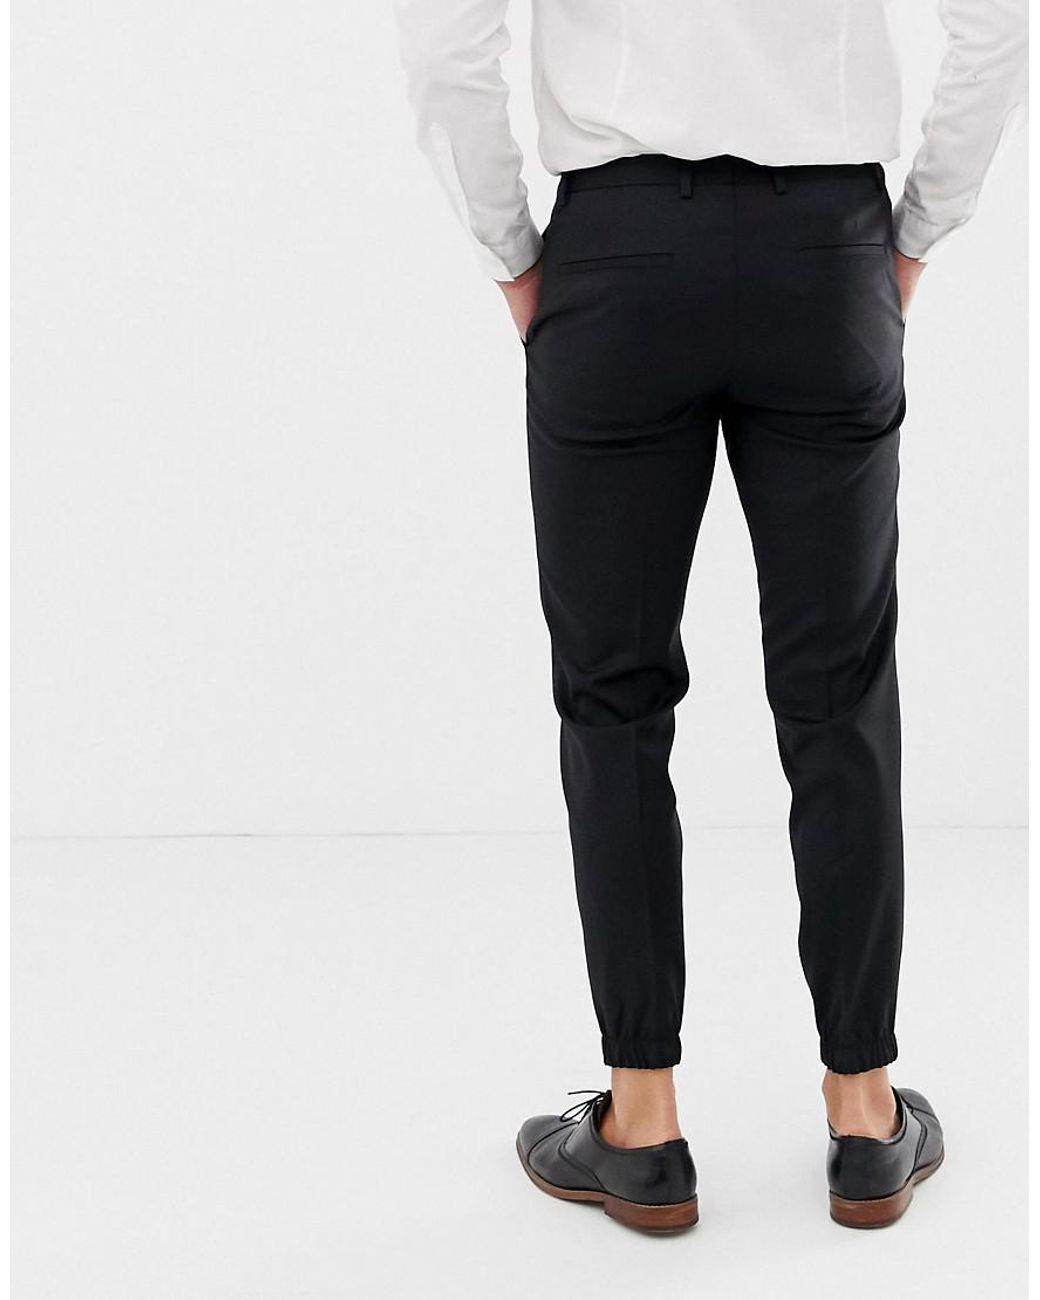 Should Men Wear Cuffed Pants A Guide To Trouser Cuffs